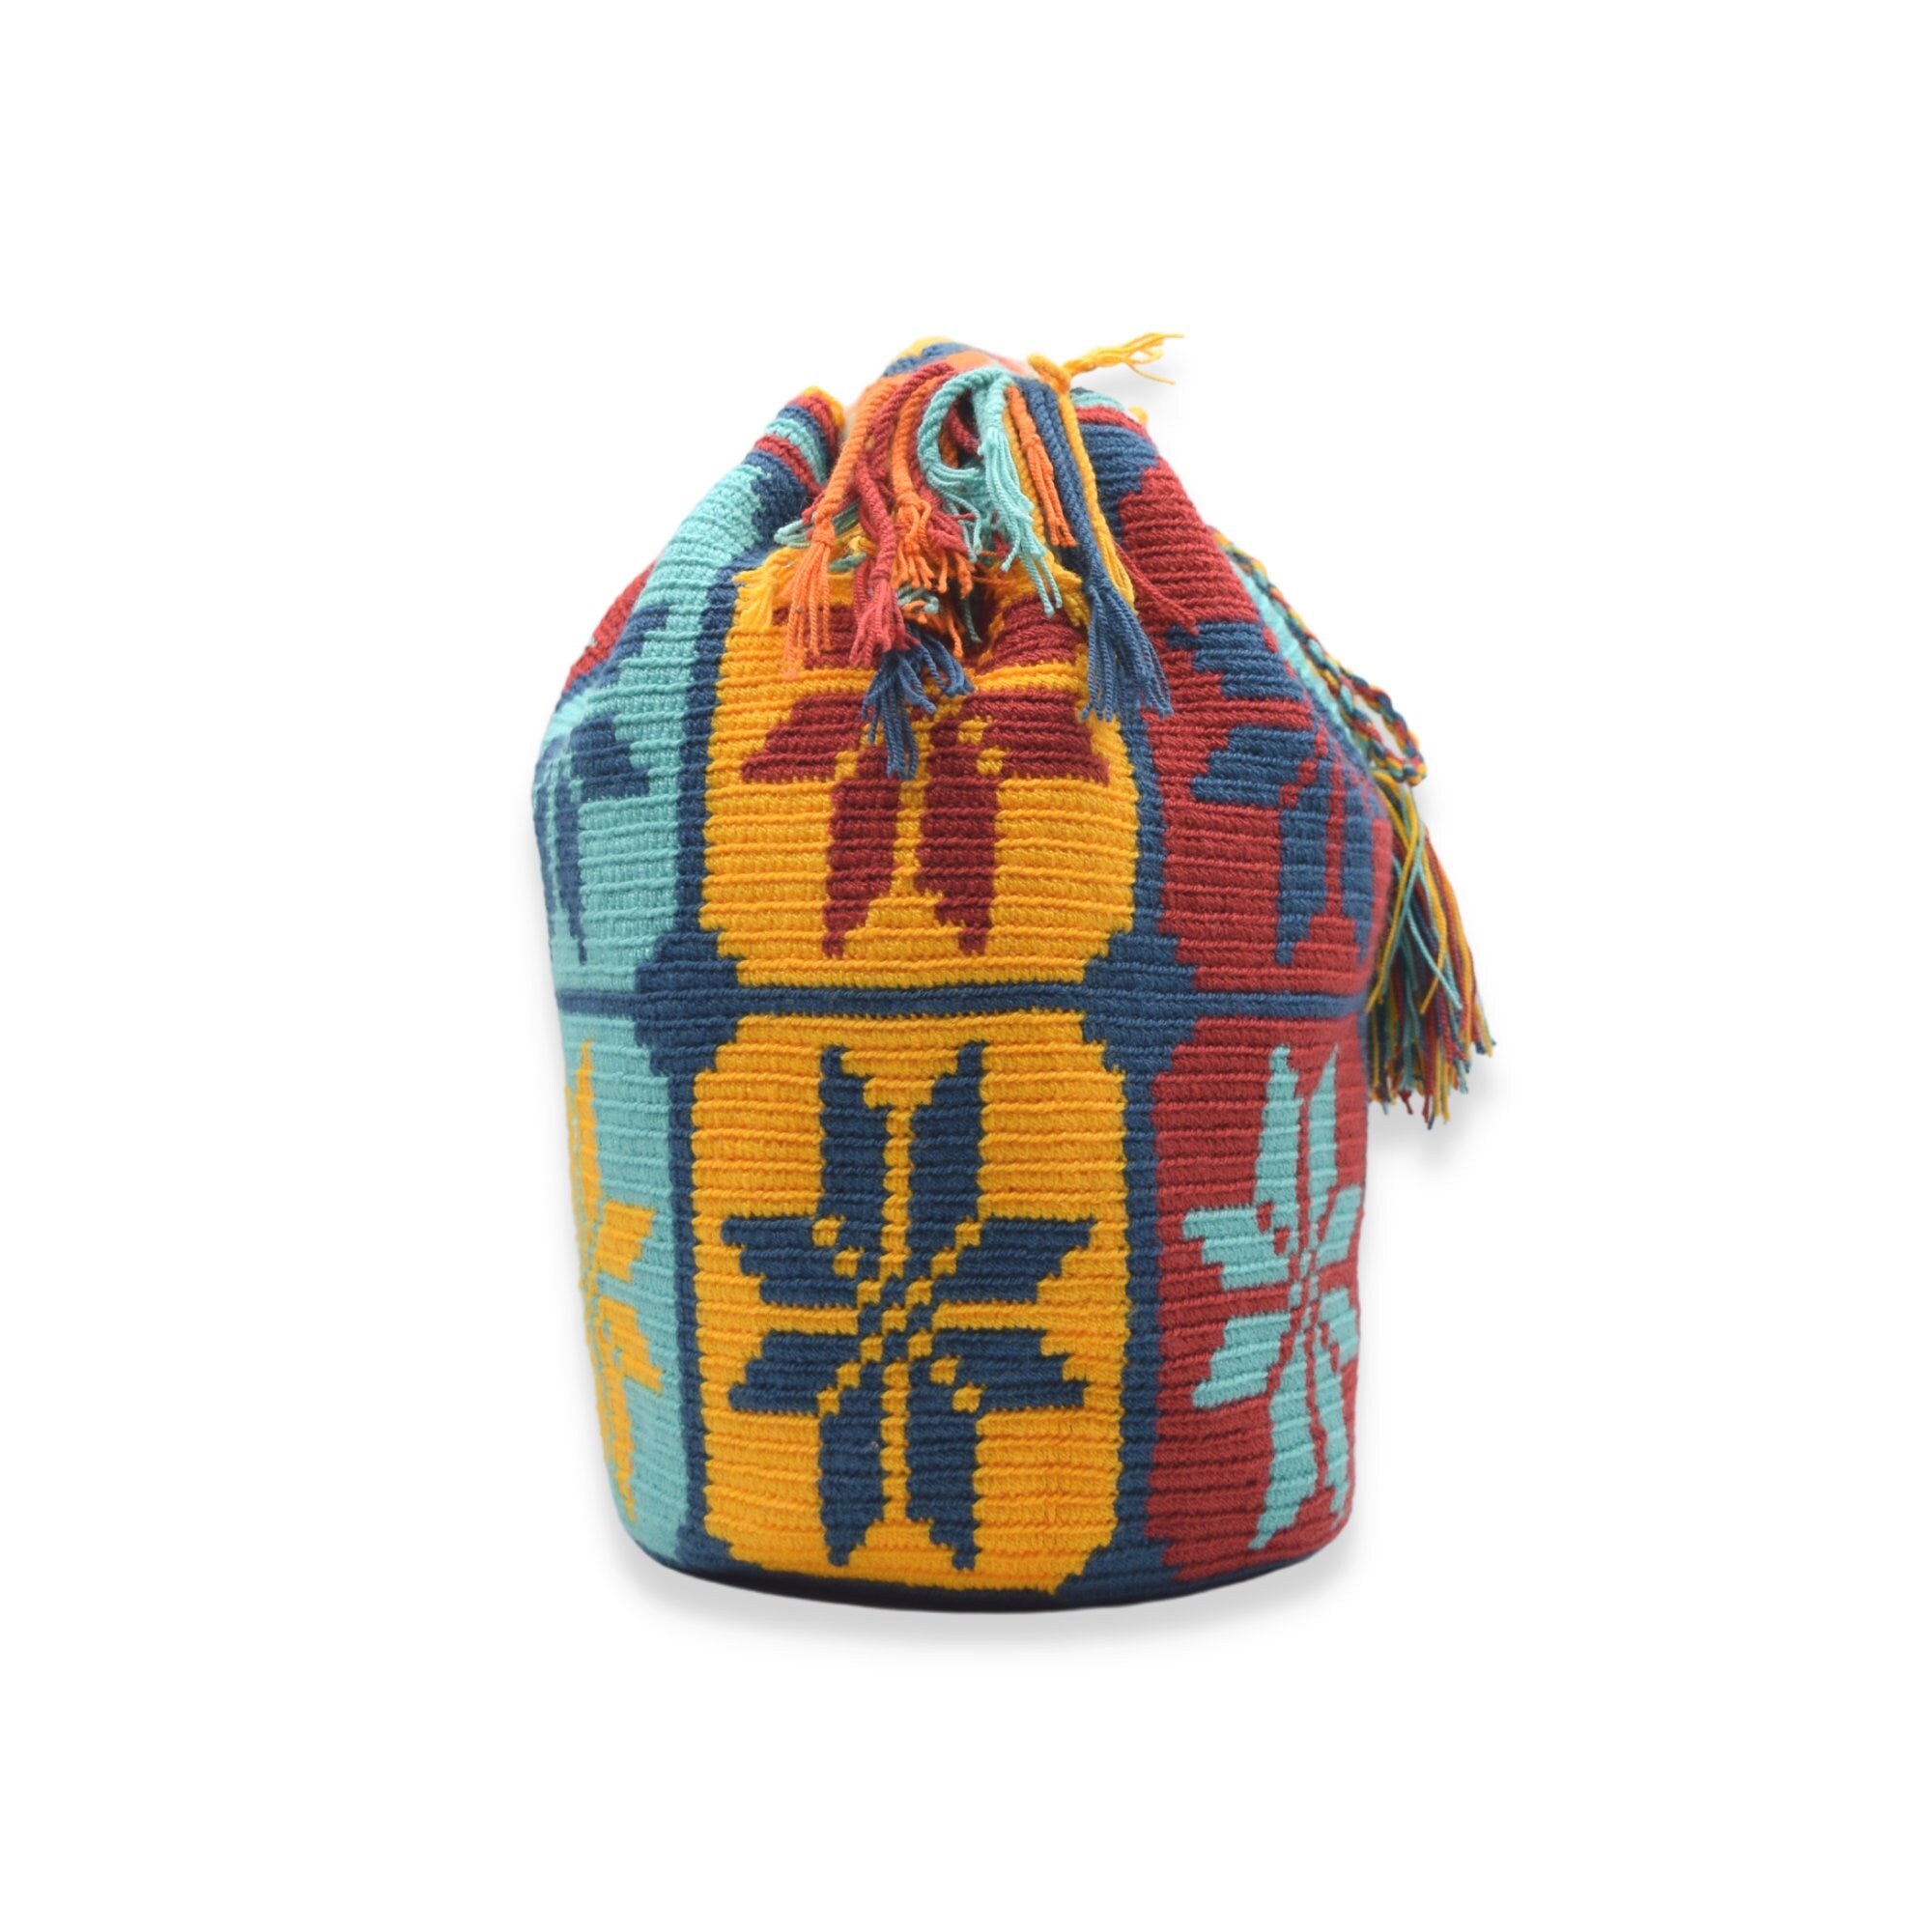 Wayuu mochila bag | Large Tradicional | Sunset Colors Flowers